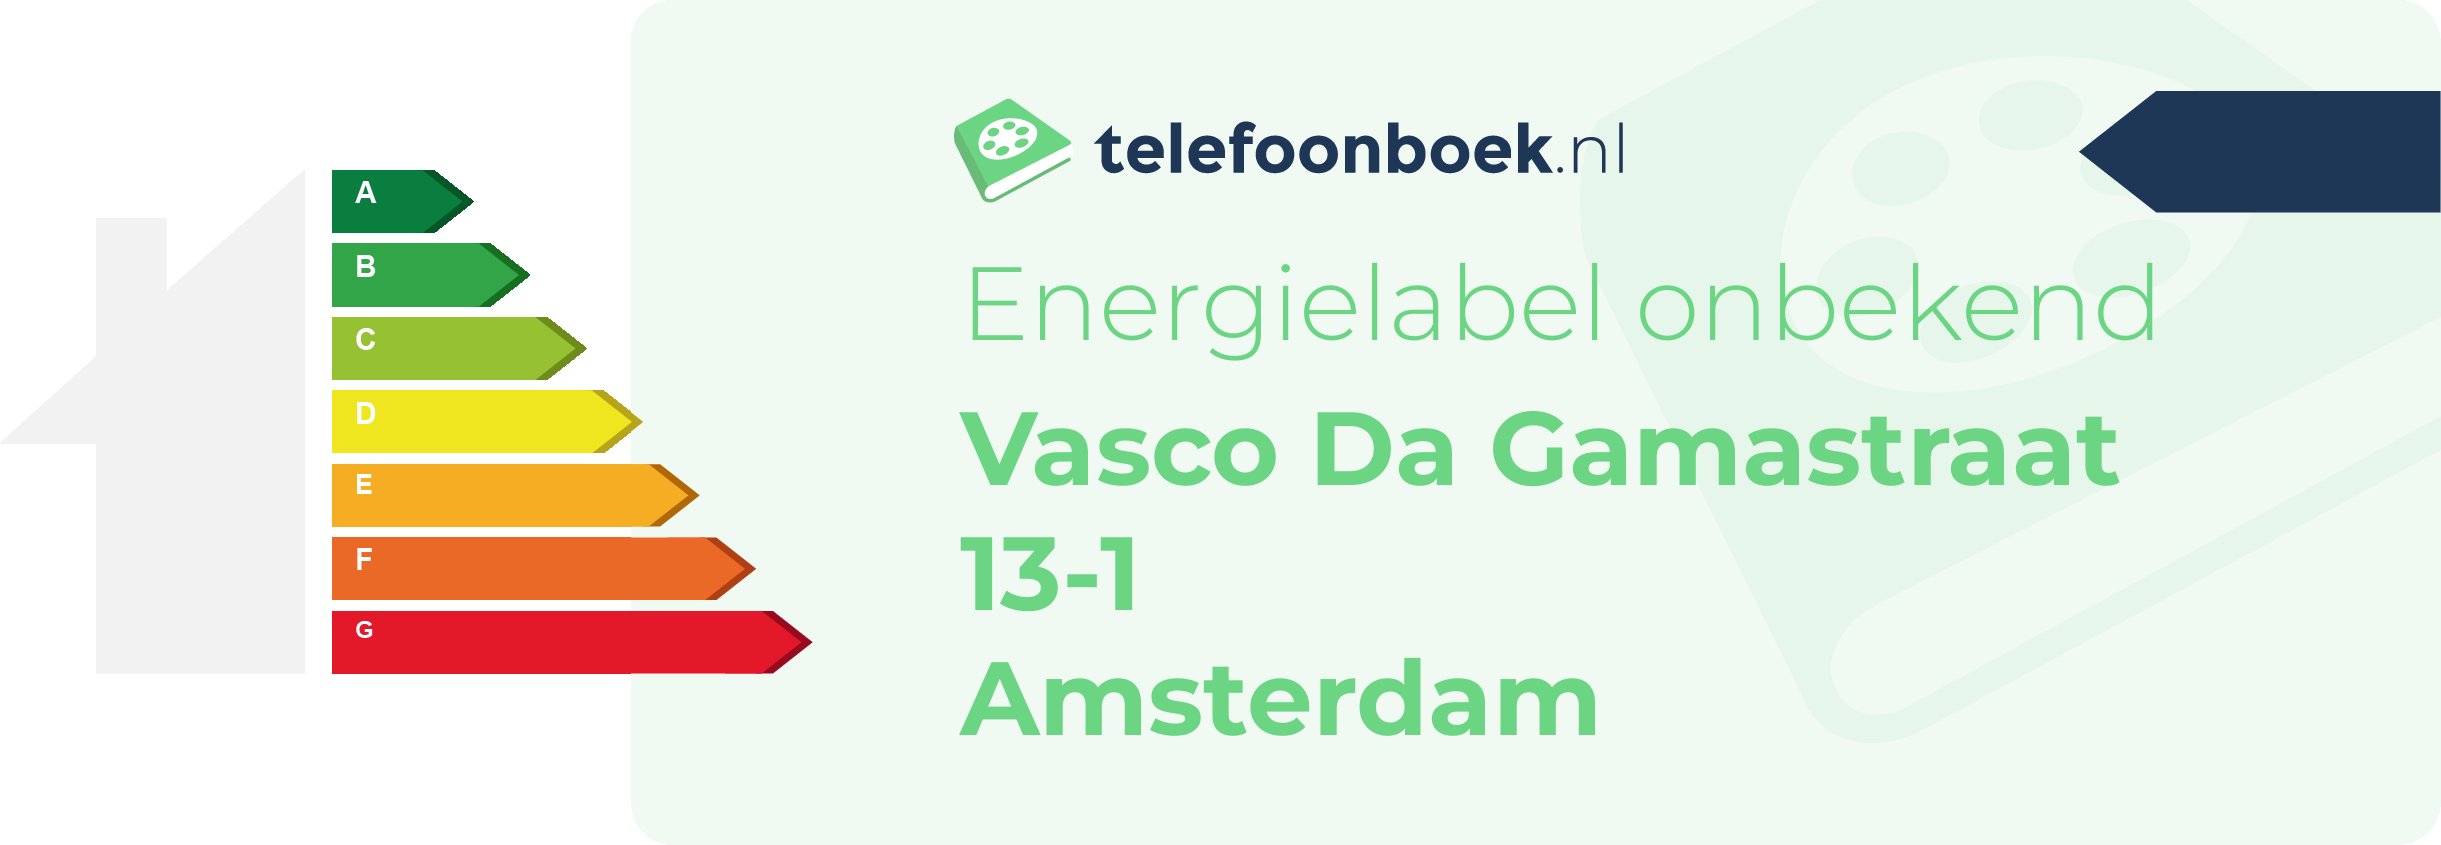 Energielabel Vasco Da Gamastraat 13-1 Amsterdam